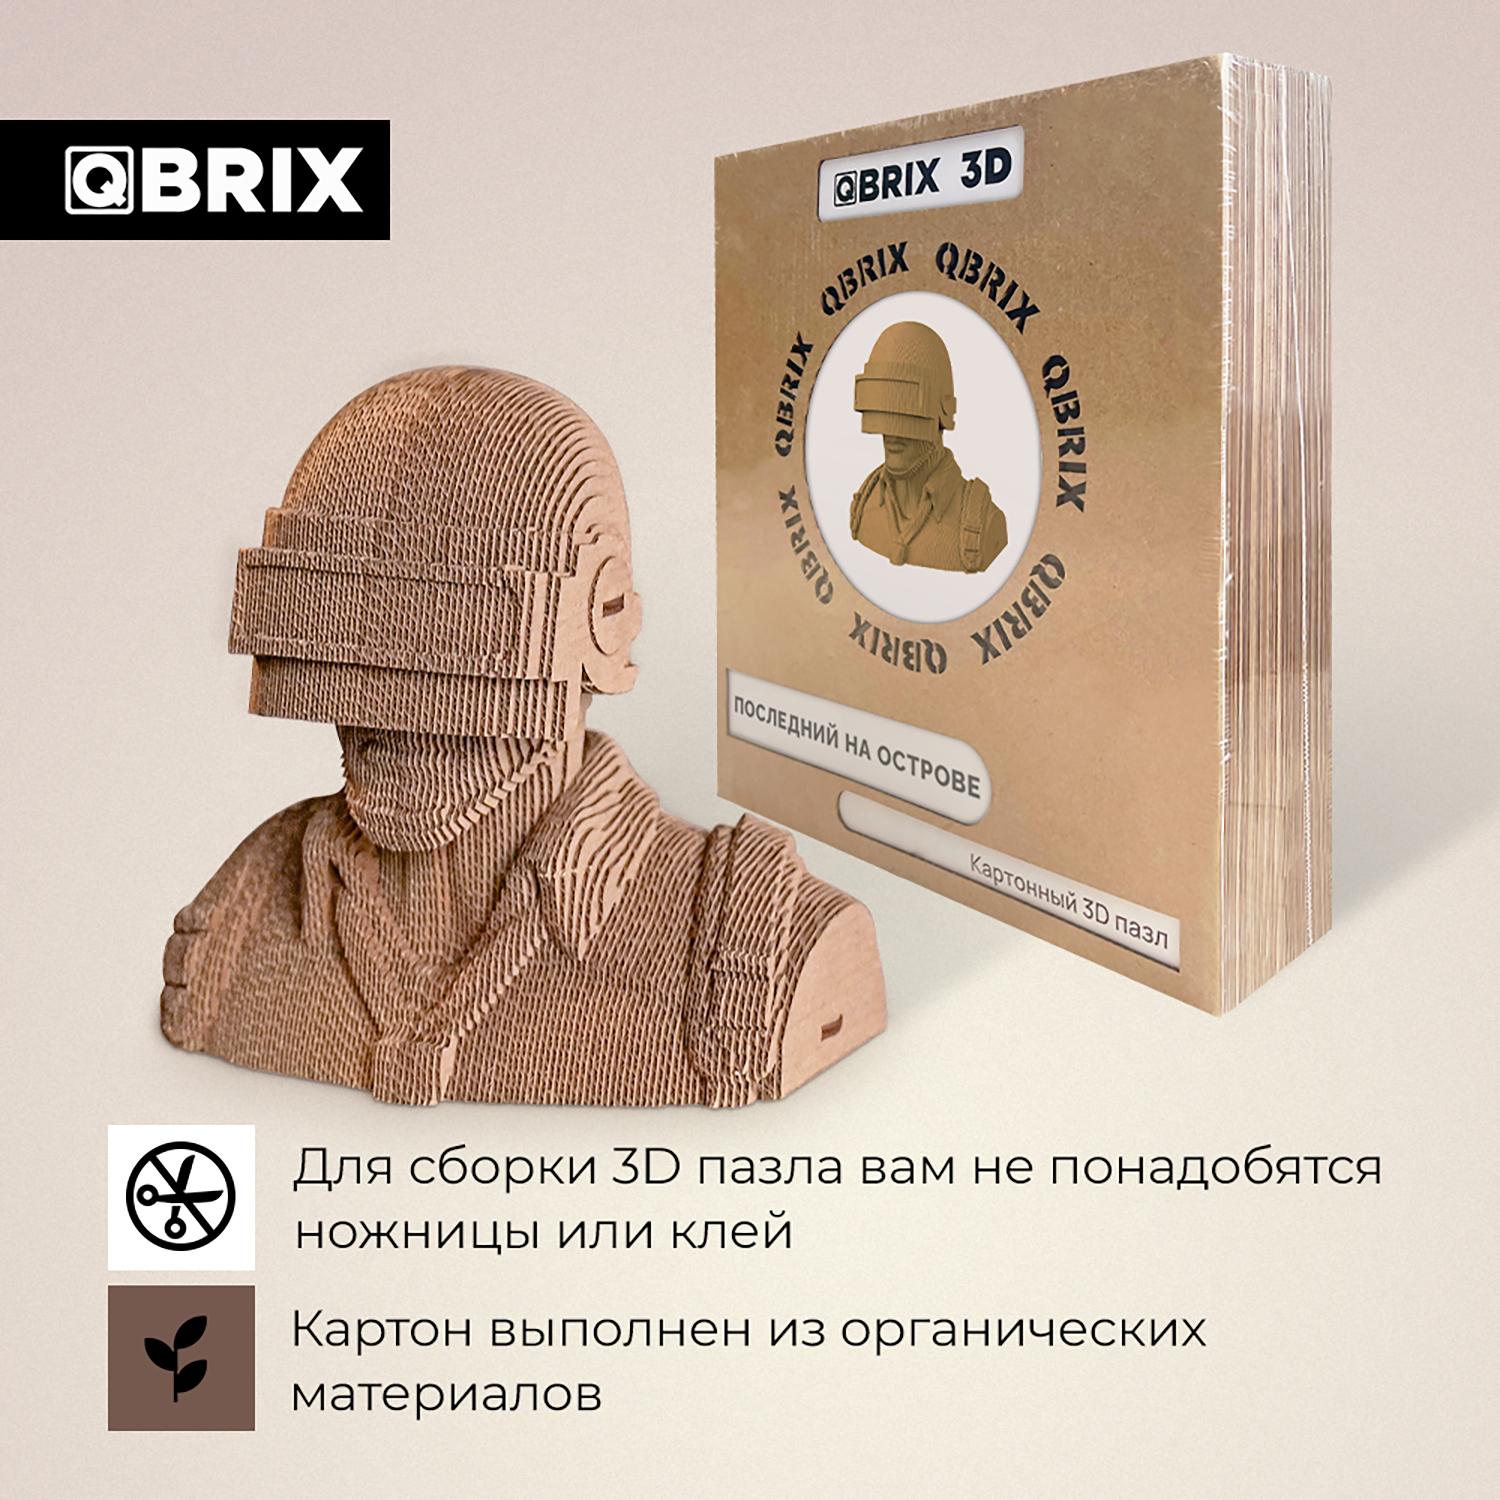 Конструктор QBRIX 3D картонный Последний на острове 20003 20003 - фото 4